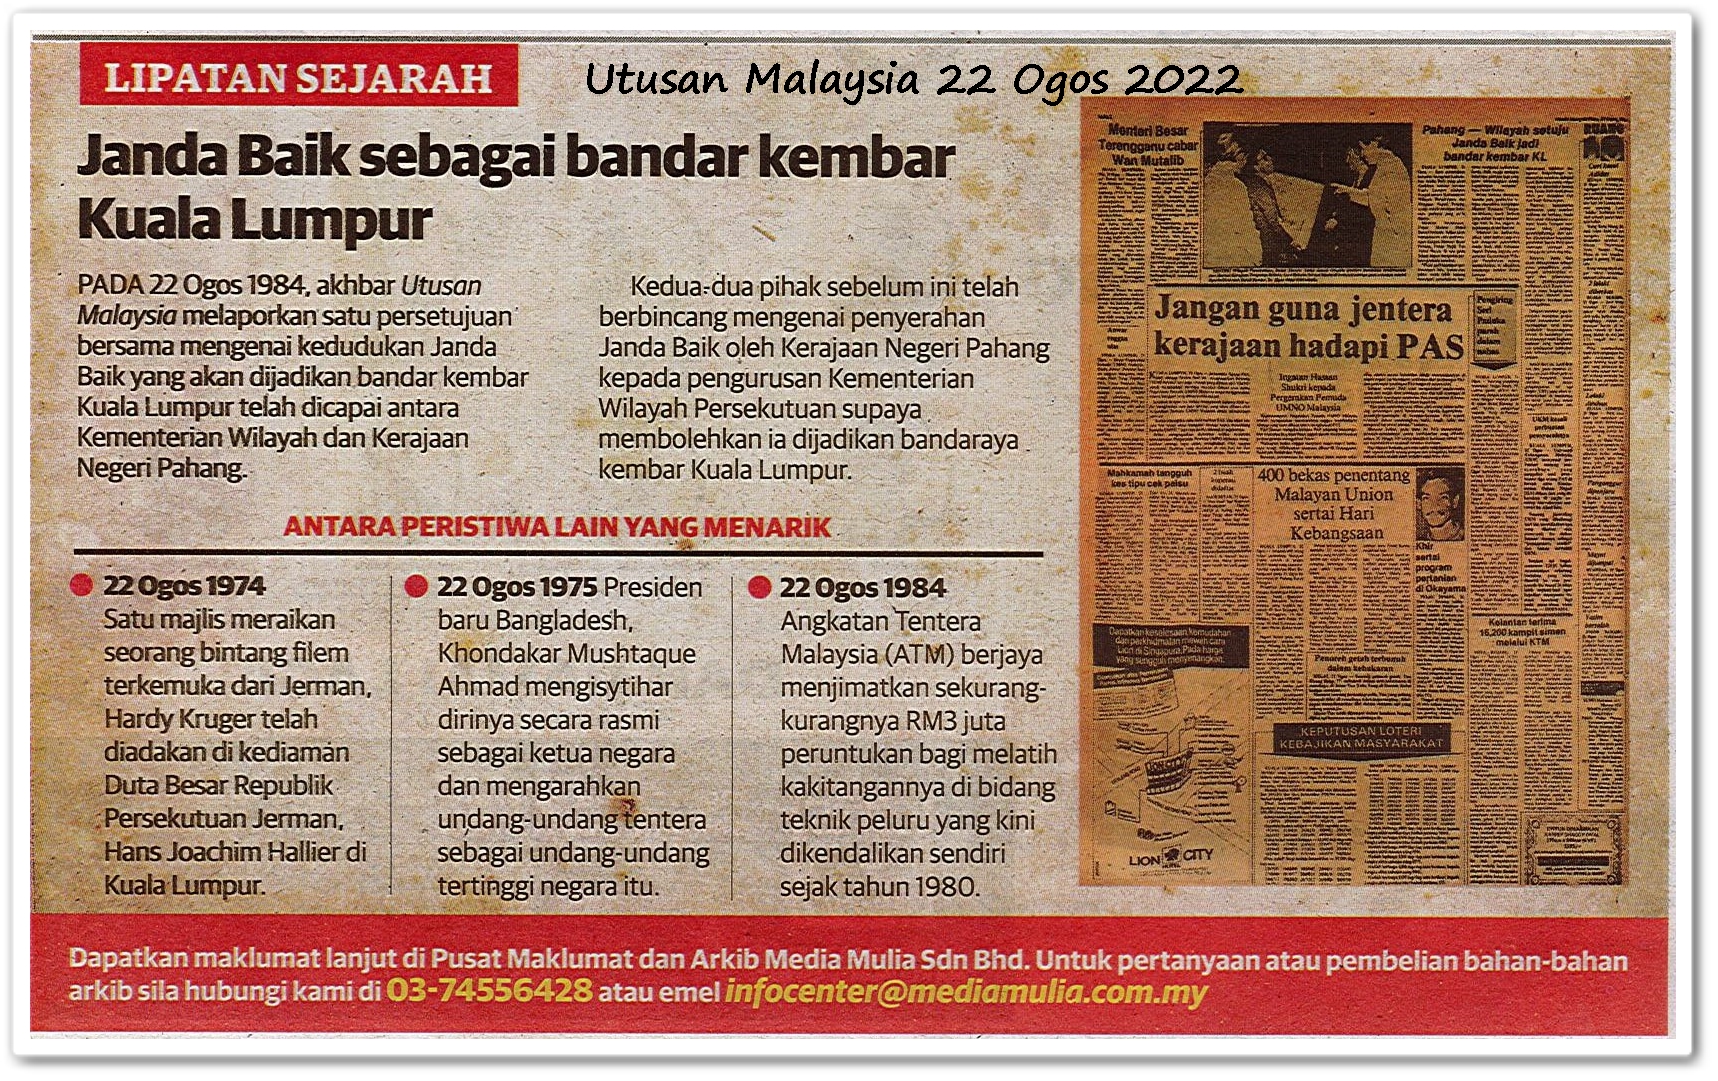 Lipatan sejarah 22 Ogos - Keratan akhbar Utusan Malaysia 22 Ogos 2022